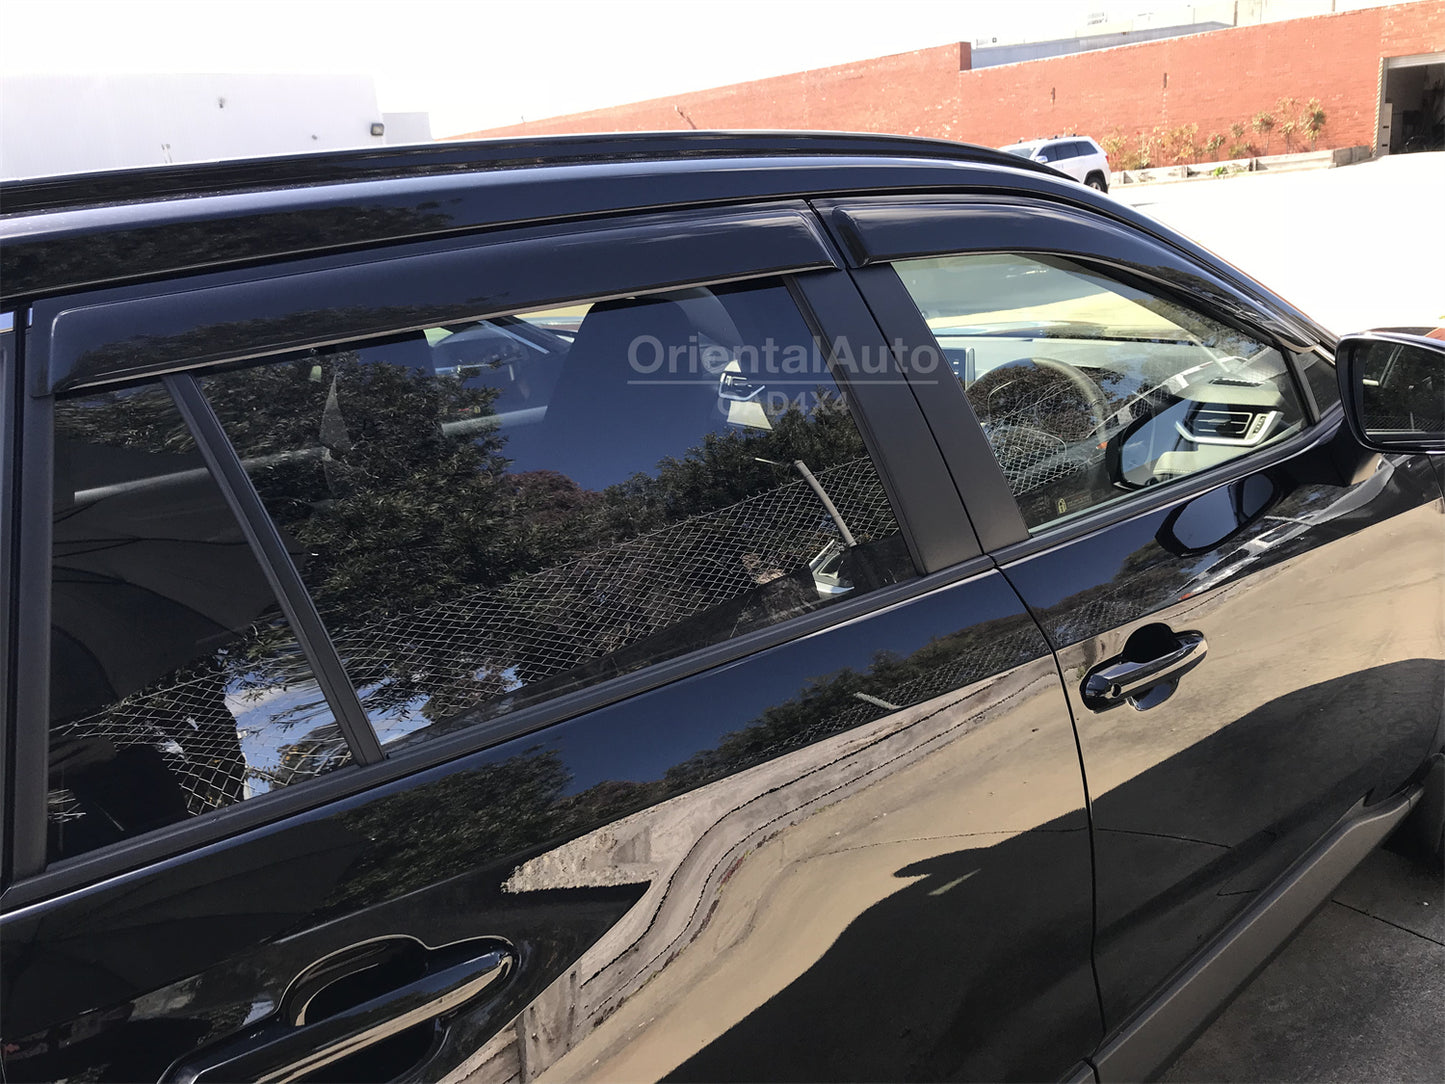 Luxury Weathershield & Injection Modeling Bonnet Protector for Toyota RAV4 2019-Onwards Weather Shields Window Visor + Hood Protector Bonnet Guard for RAV 4